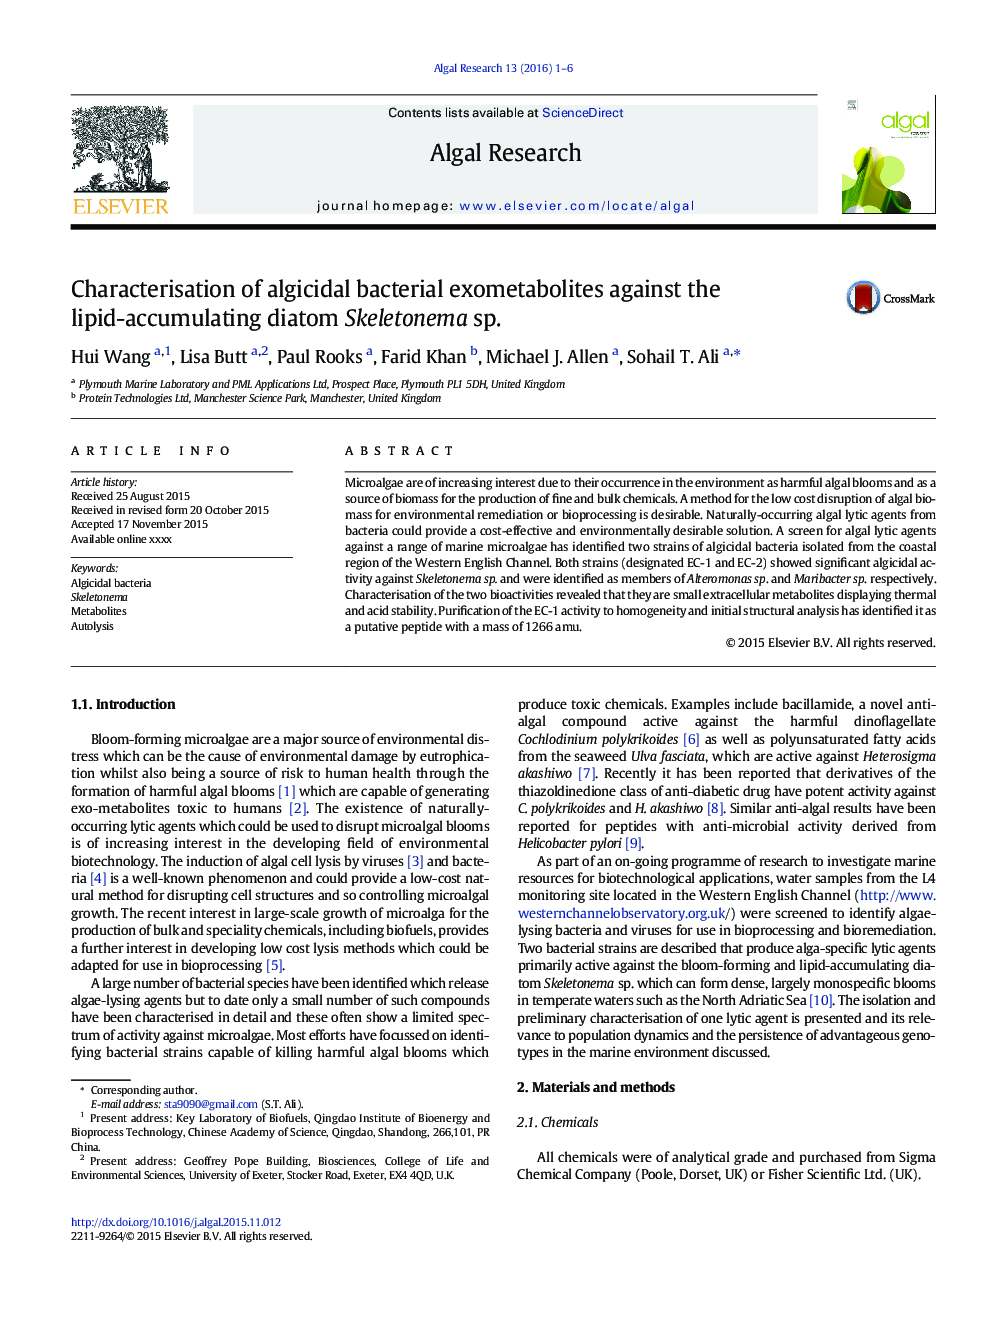 Characterisation of algicidal bacterial exometabolites against the lipid-accumulating diatom Skeletonema sp.